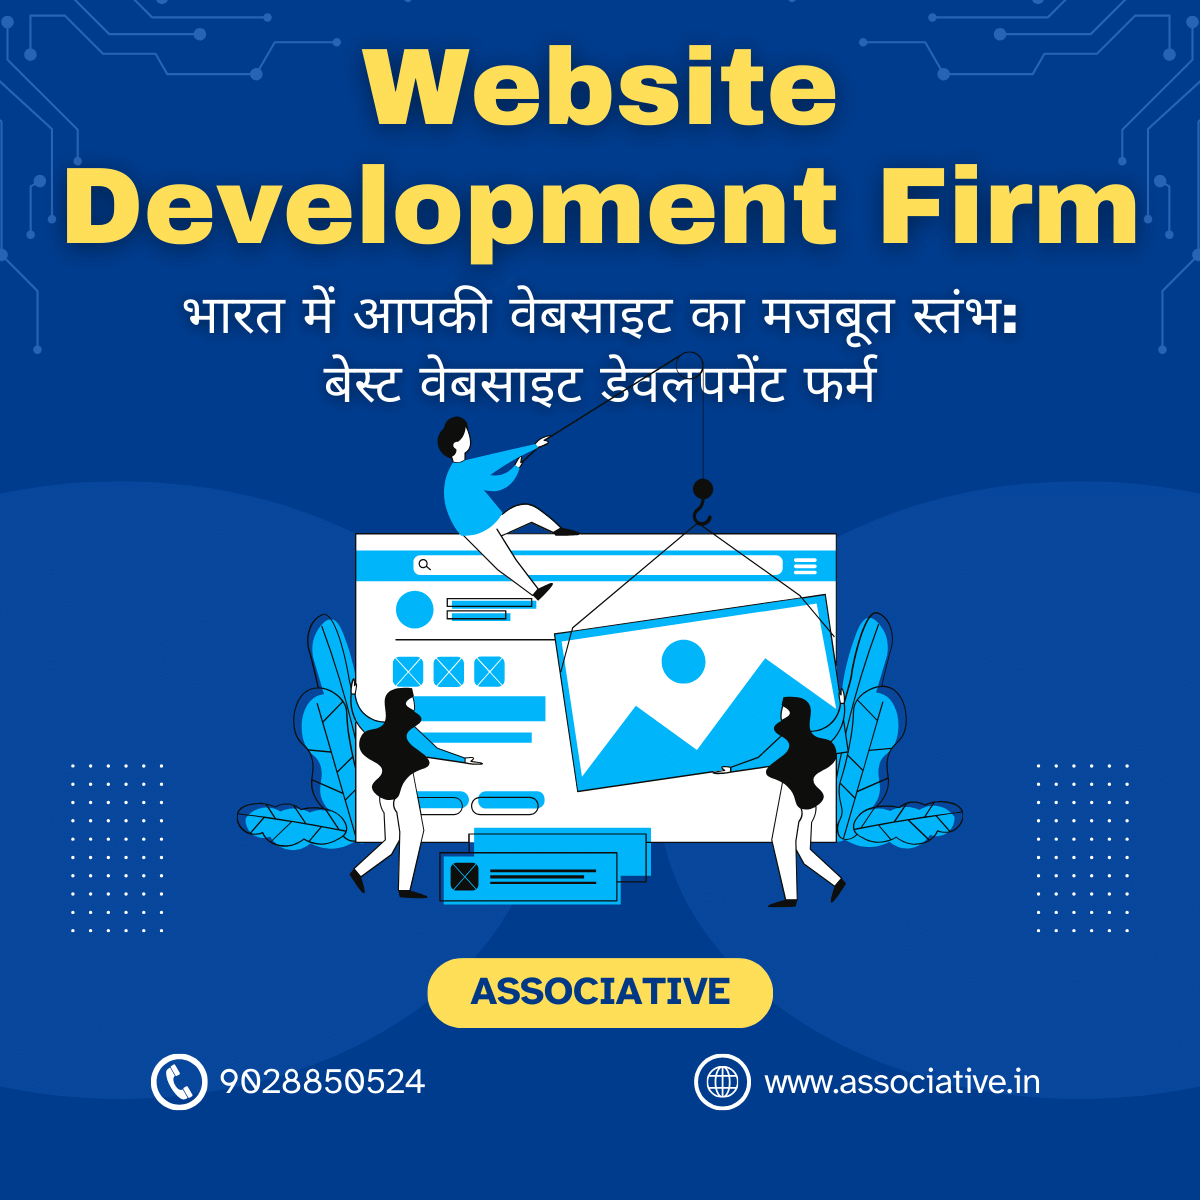 Local Website Development Company Near You in Pune